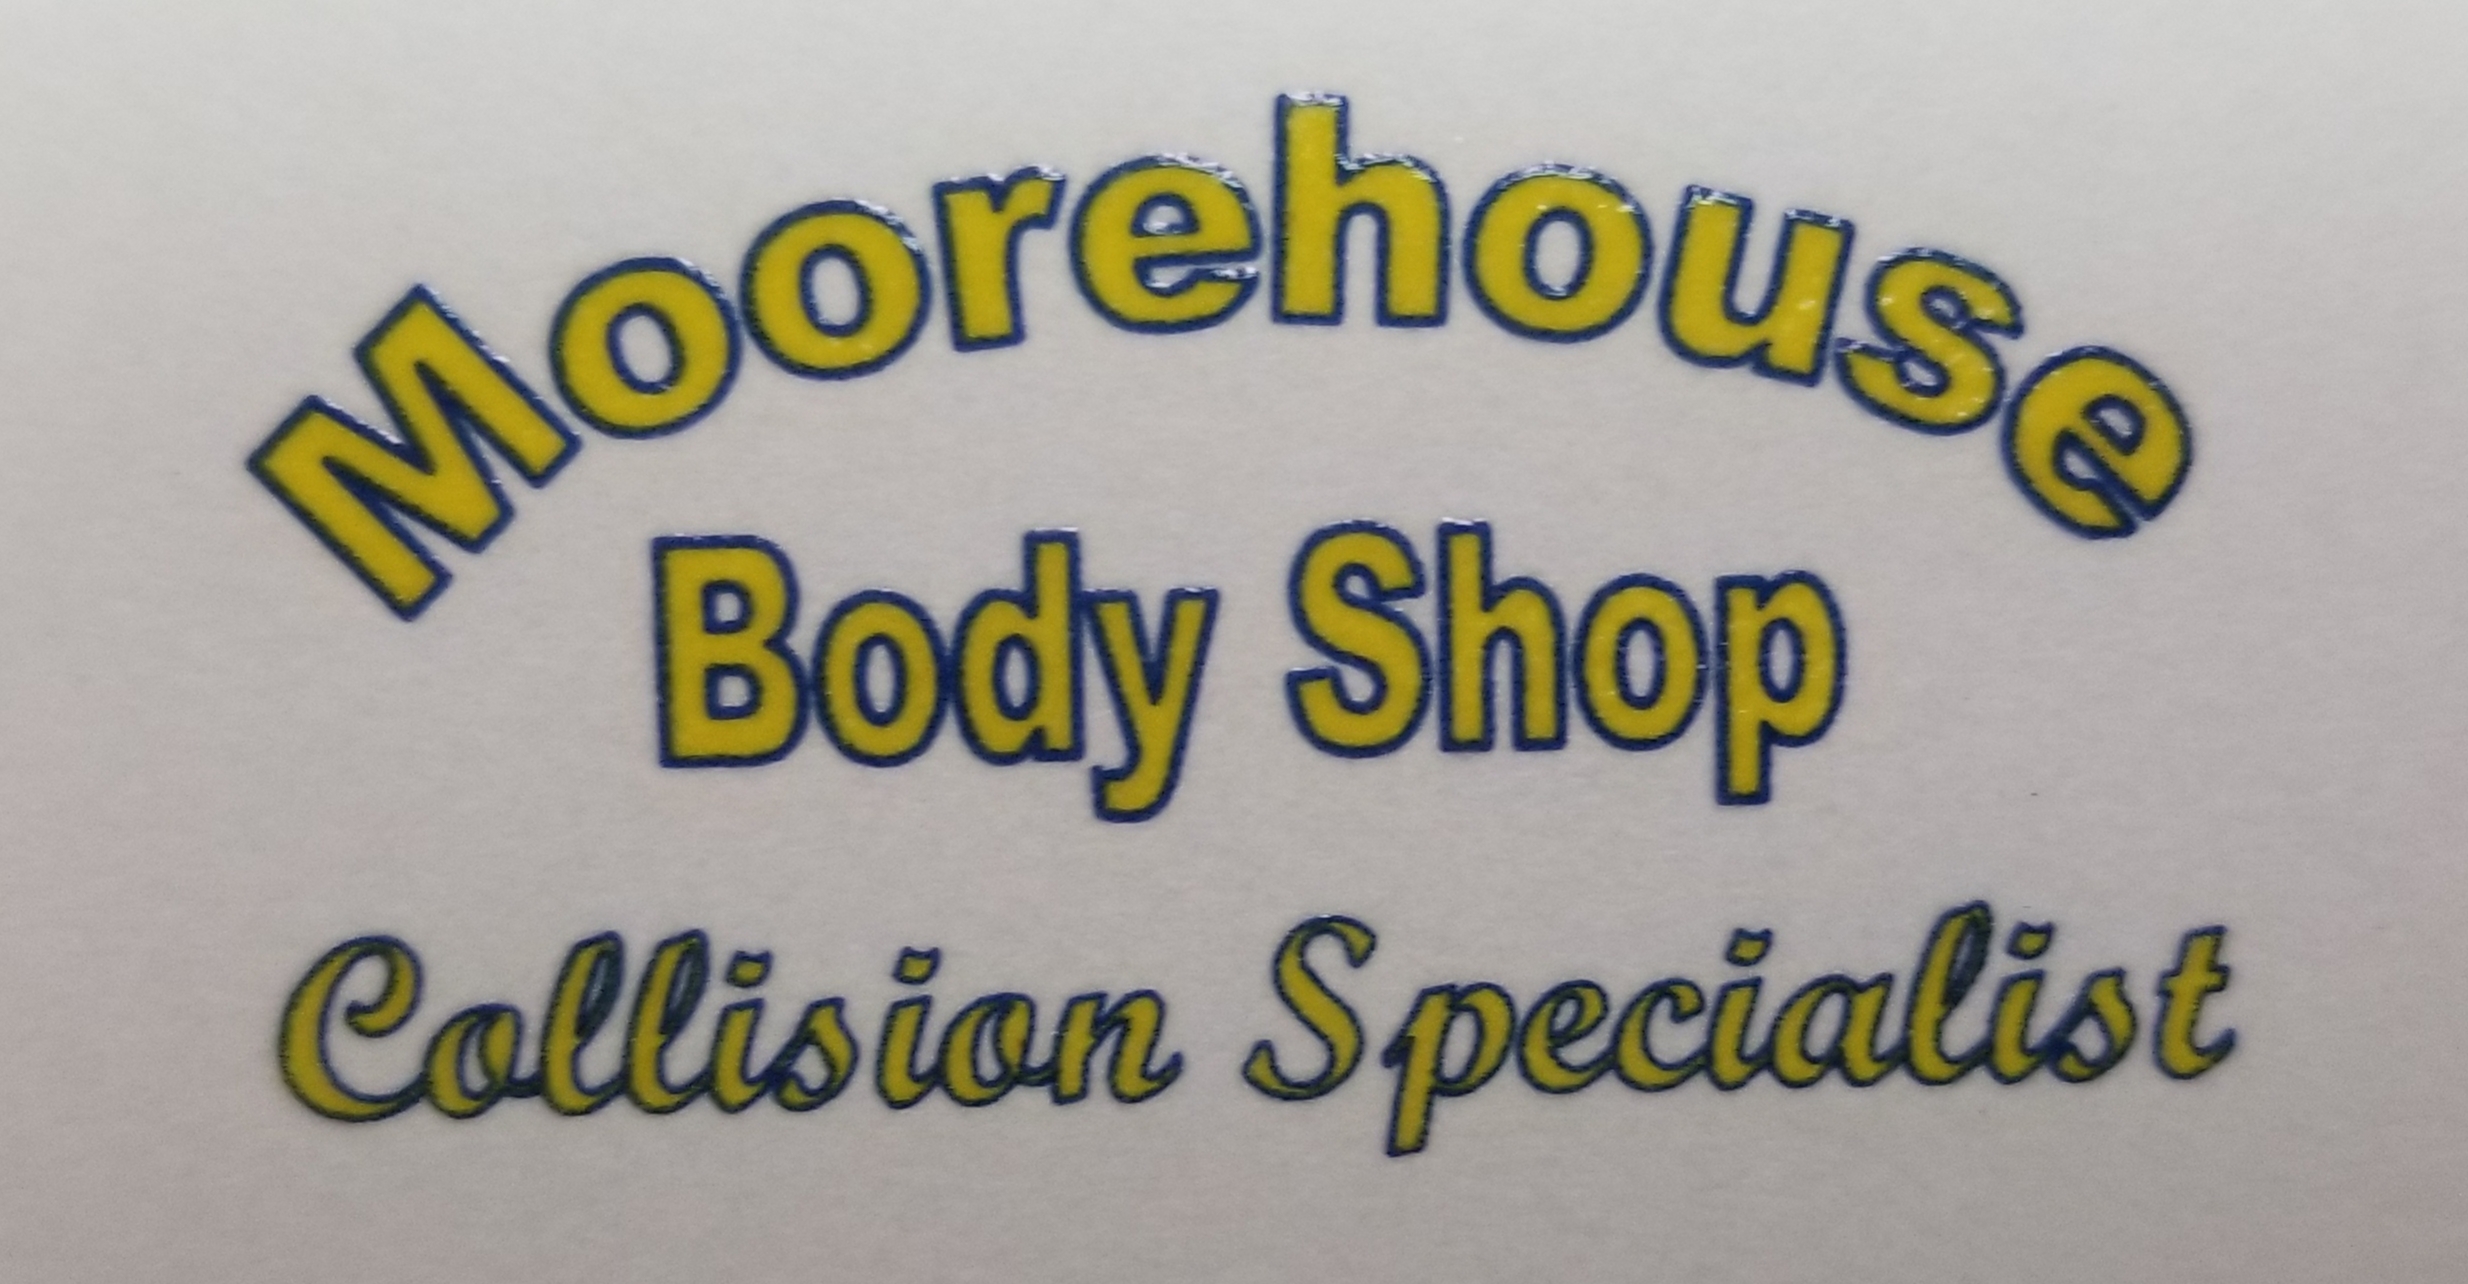 Moorehouse Body Shop Inc.